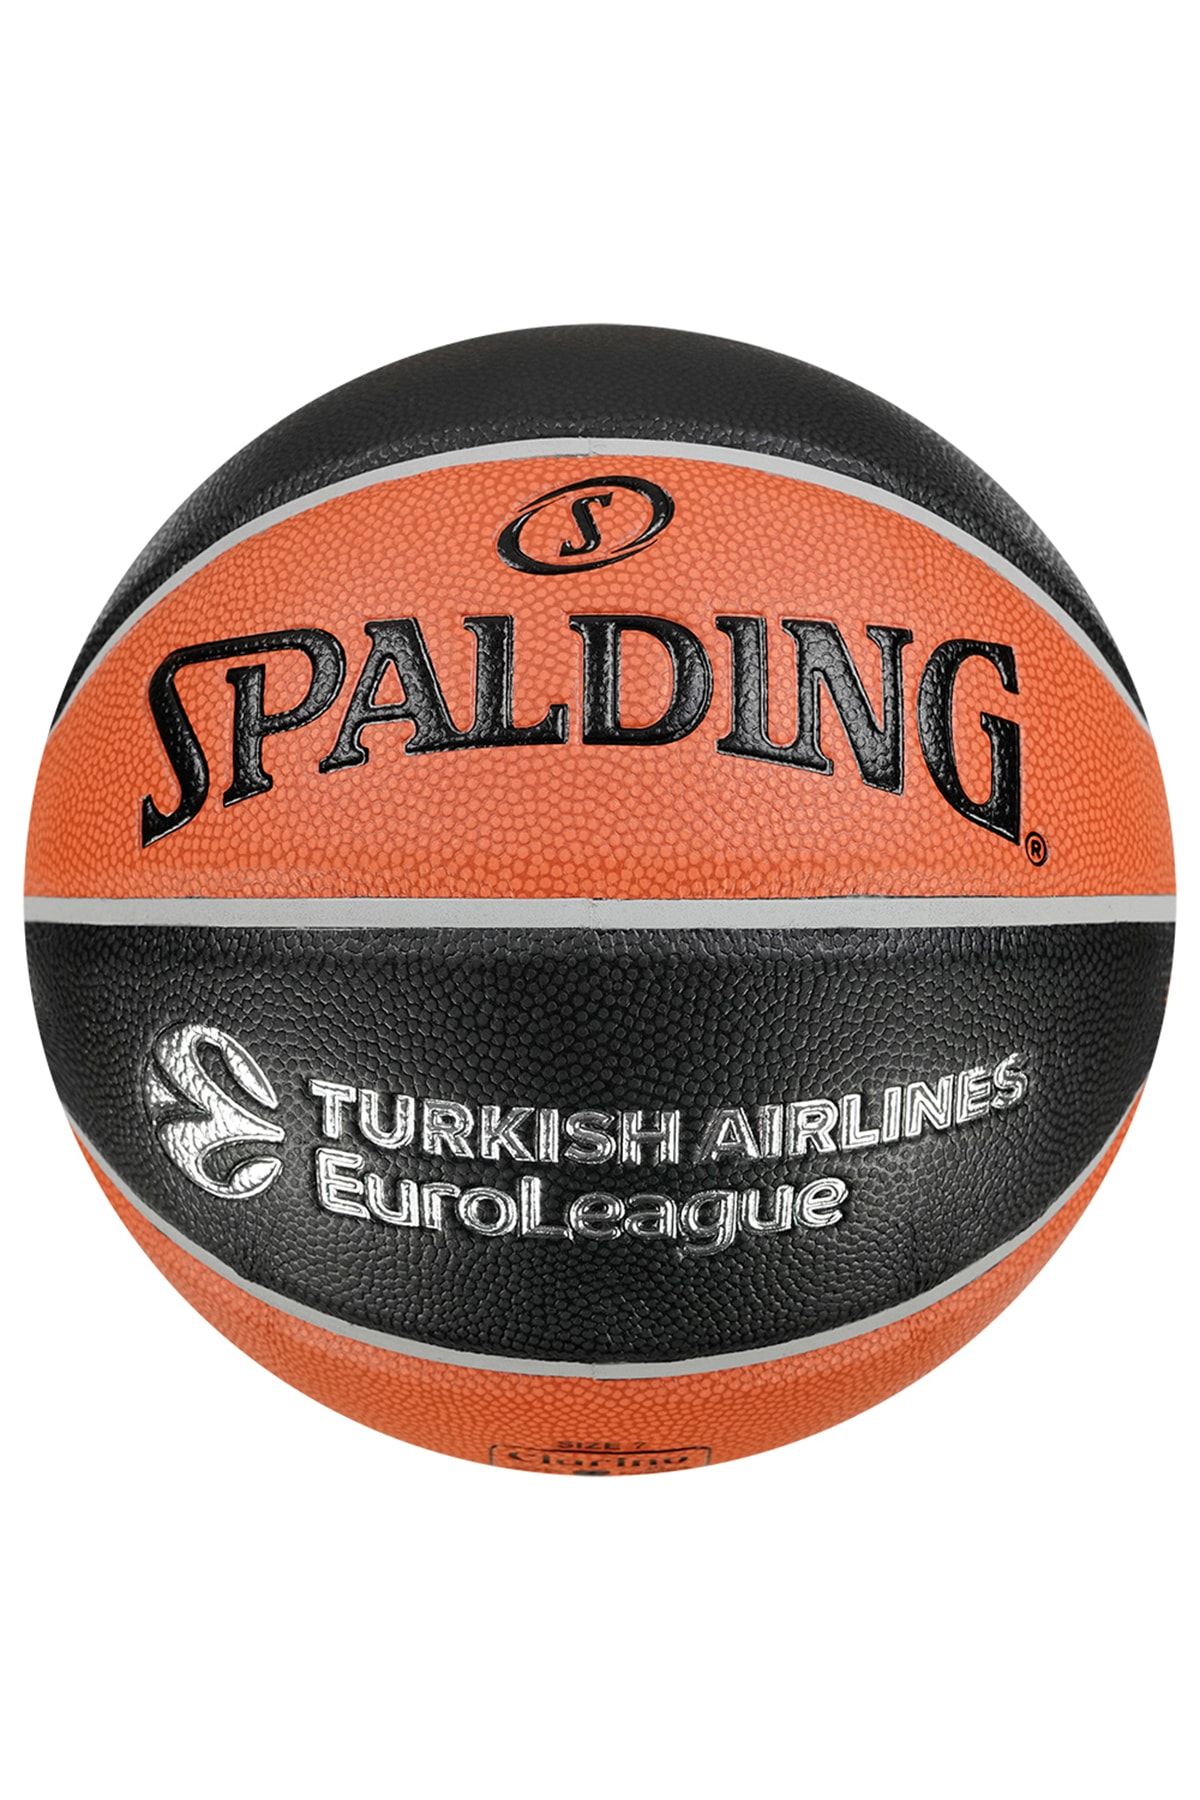 Spalding Tf1000 Euroleague Fıba Onaylı 7 No Basketbol Topu